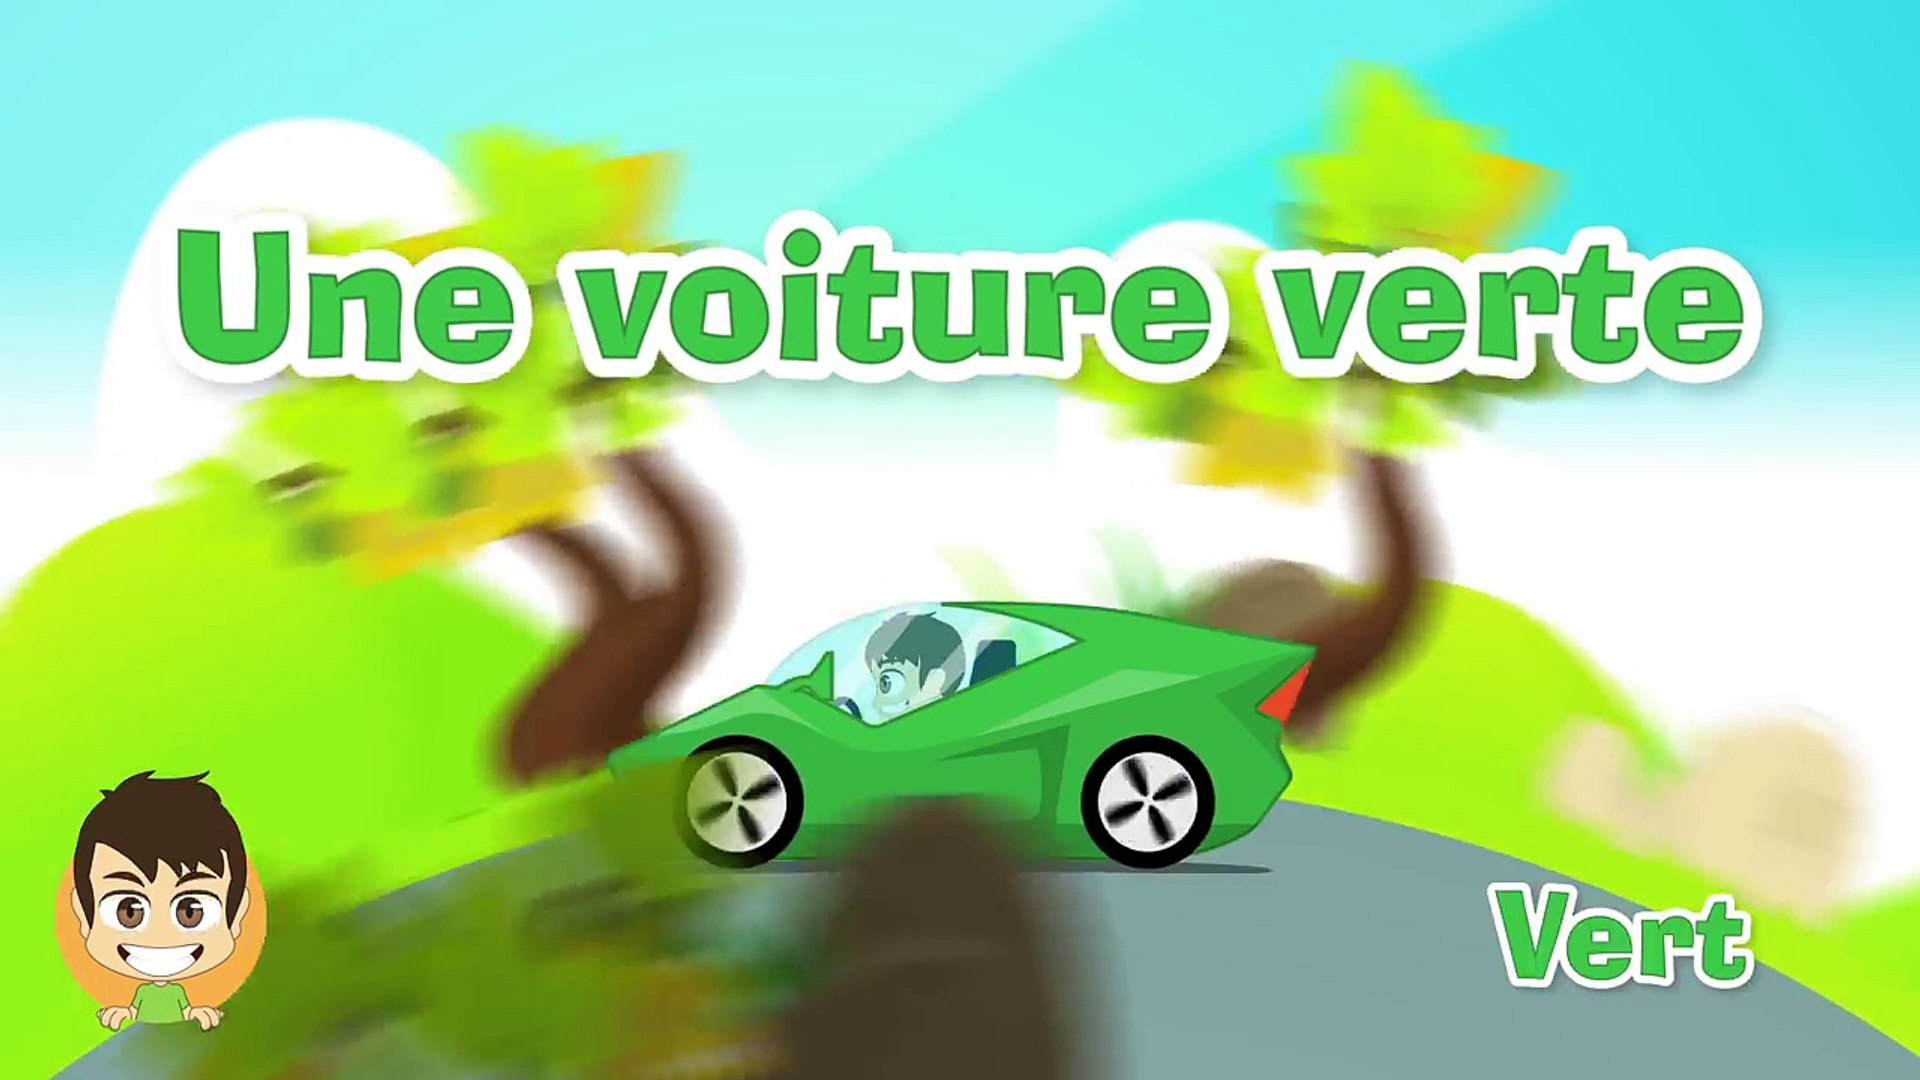 ⁣Learn Colors with Cars in French for Kids - تعليم ألوان السيارات باللغة الفرنسية للاطفال